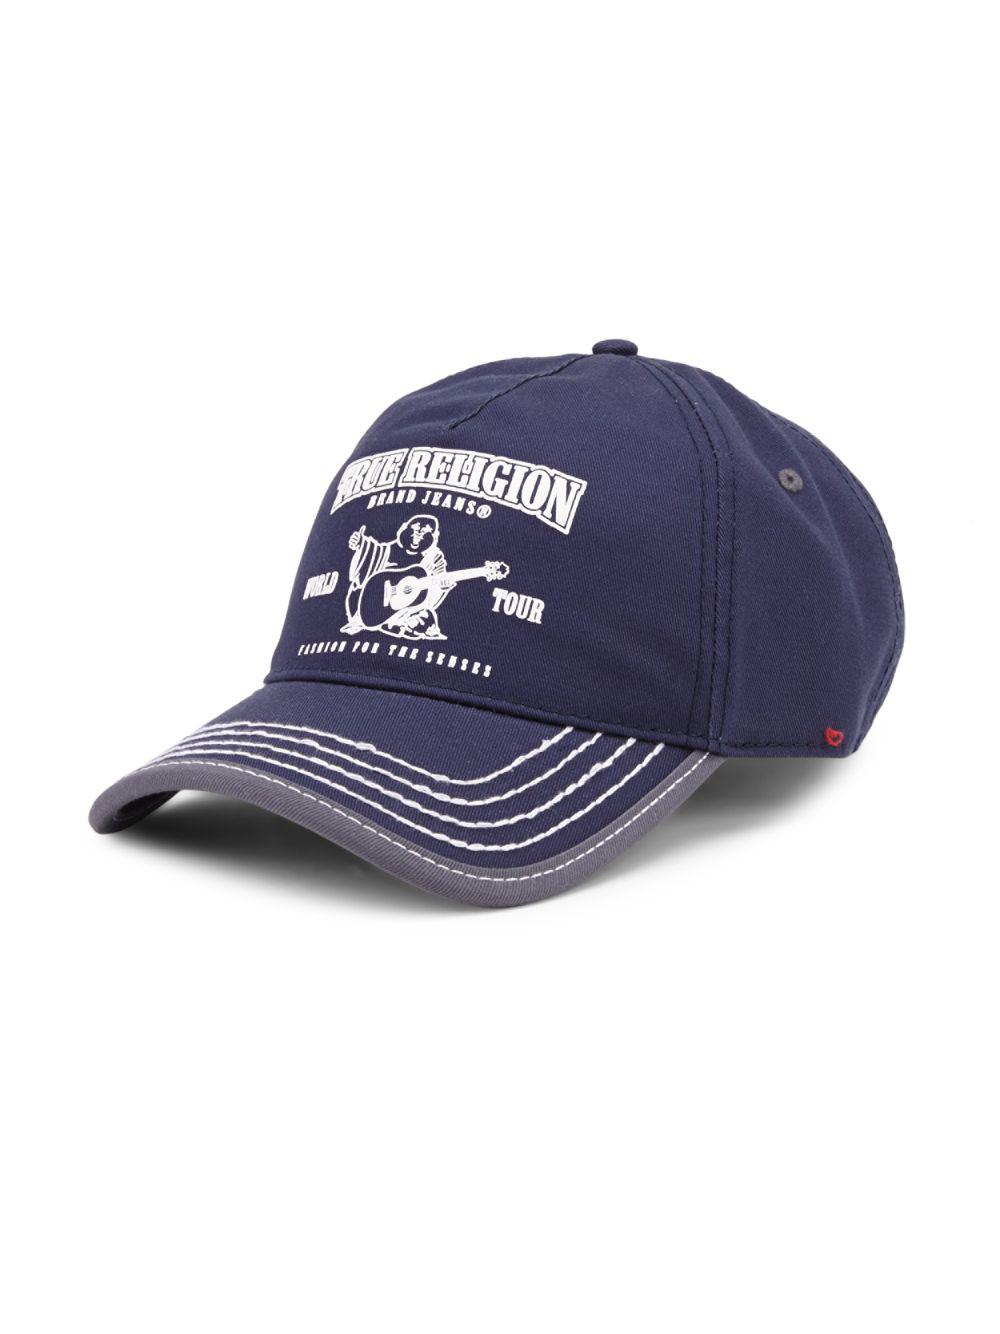 blue true religion hat